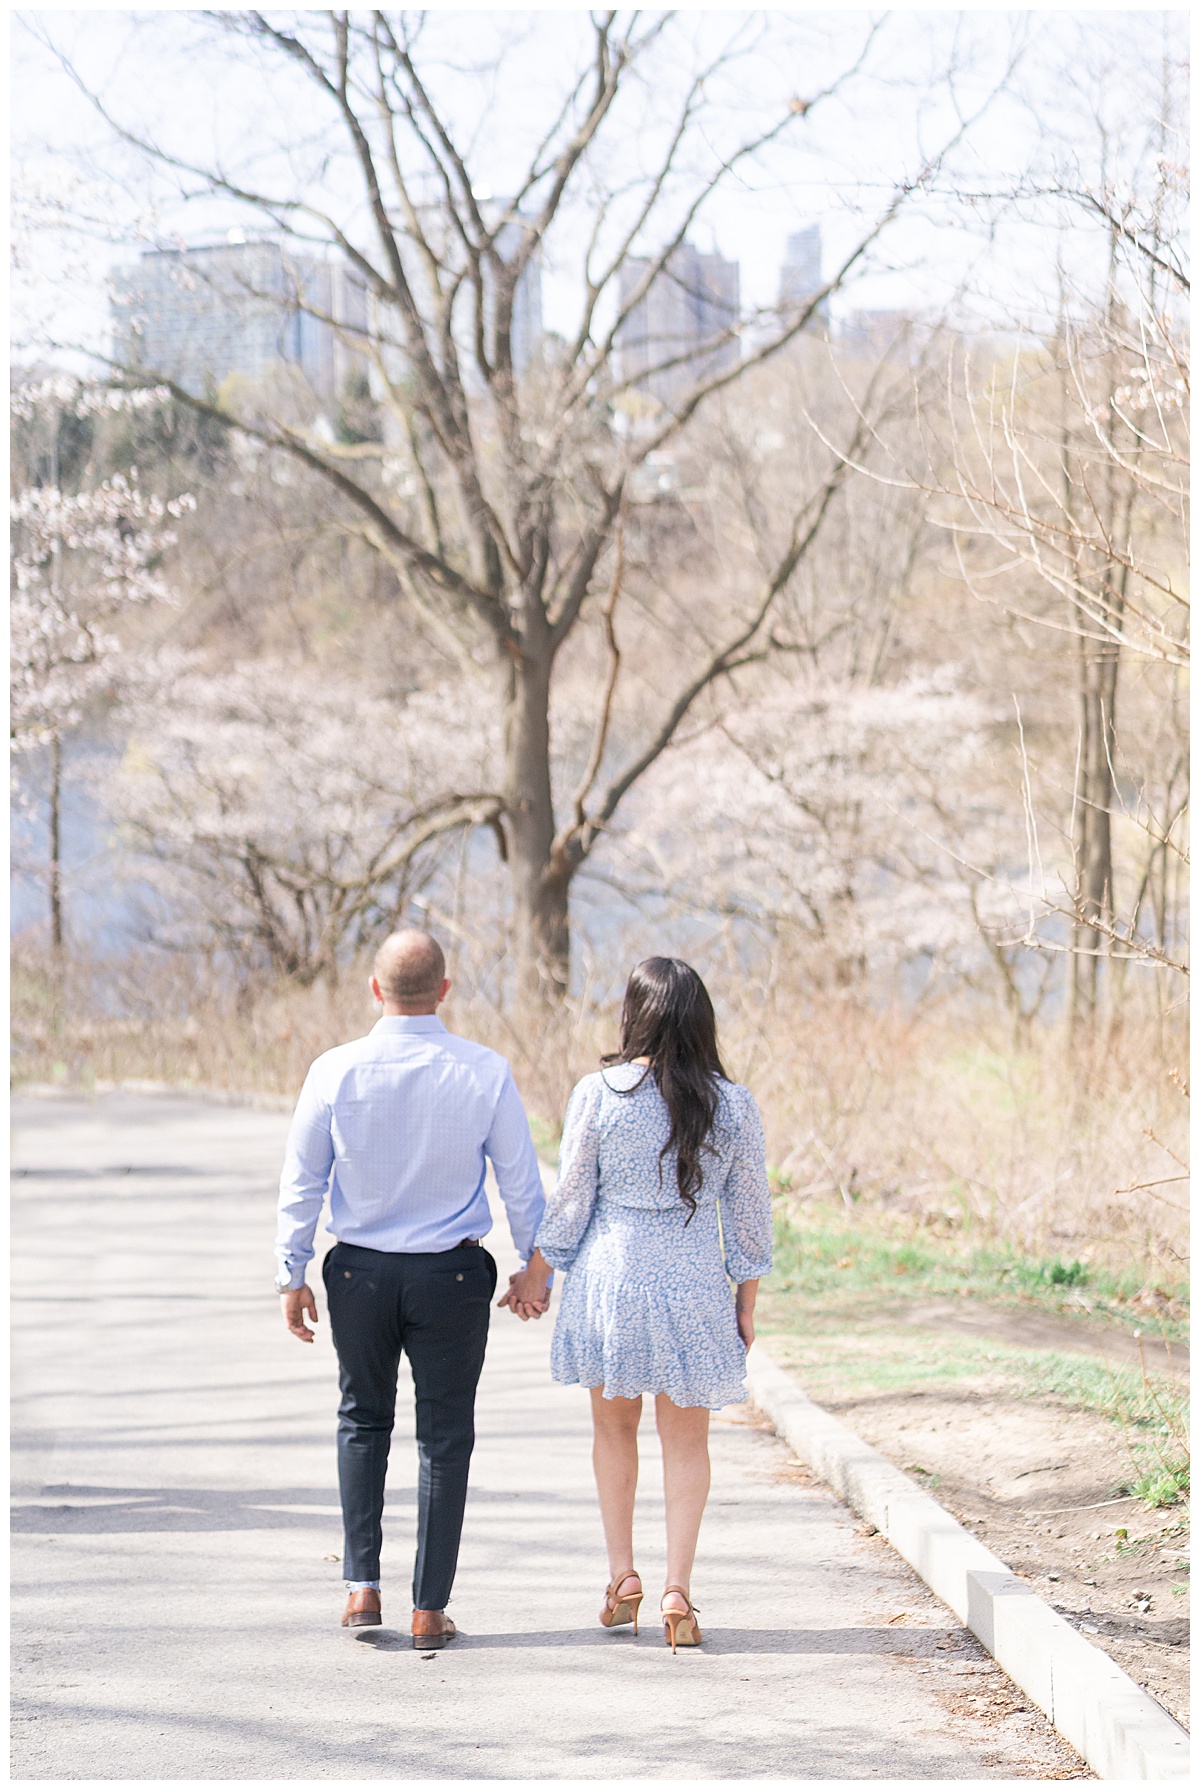 Guy and girl walk hand in hand for Toronto Wedding Photographer